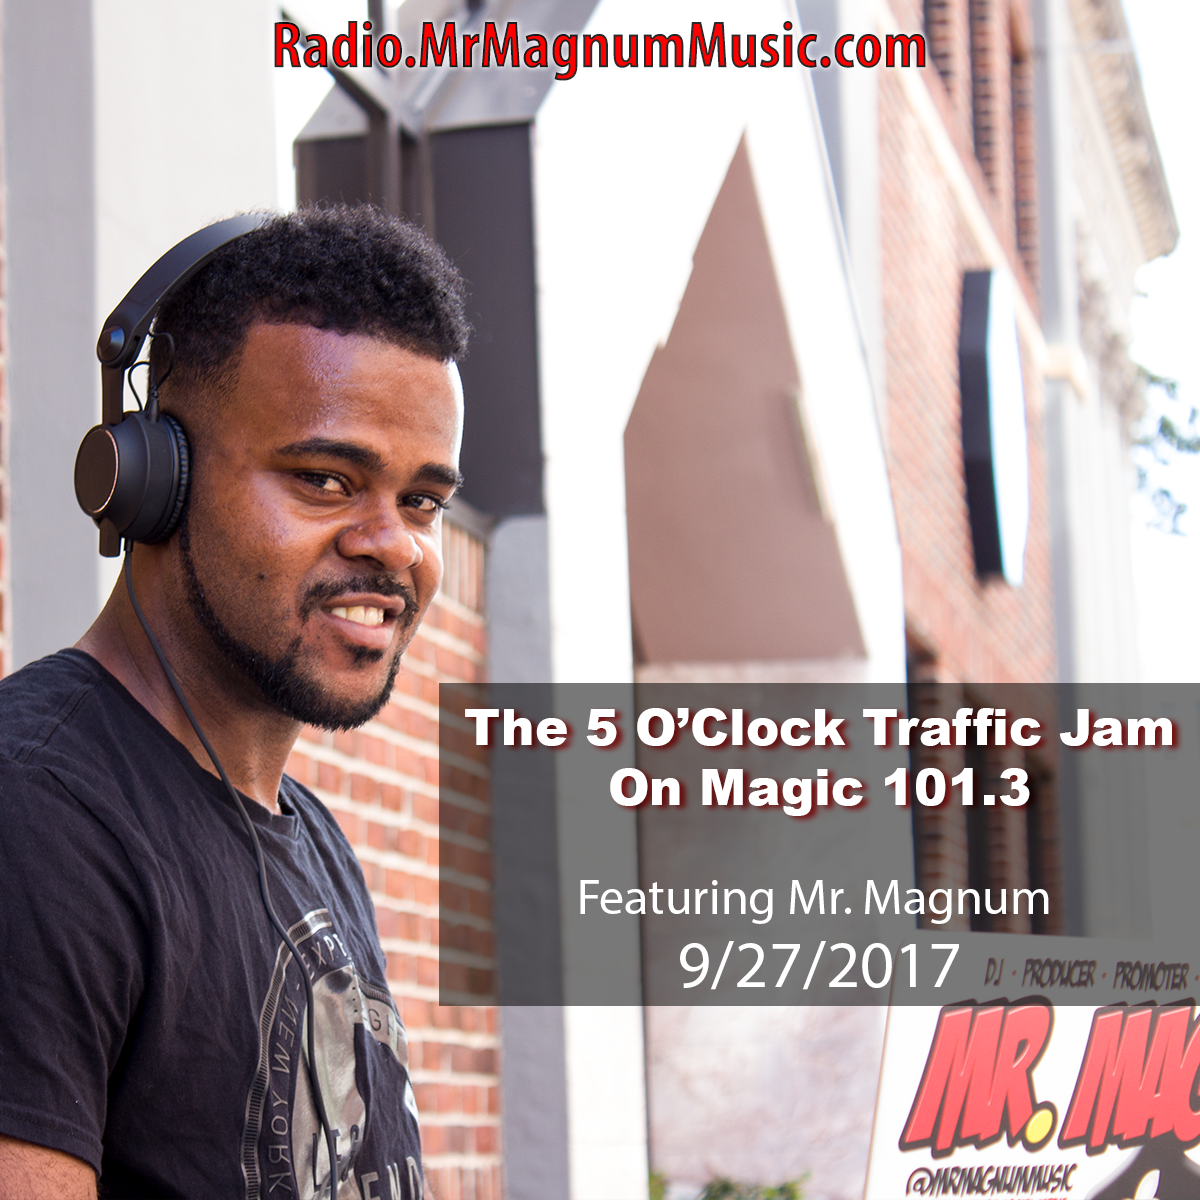 The 5 O'Clock Traffic Jam 20170927 featuring Gainesville's #1 DJ, Mr. Magnum on Magic 101.3